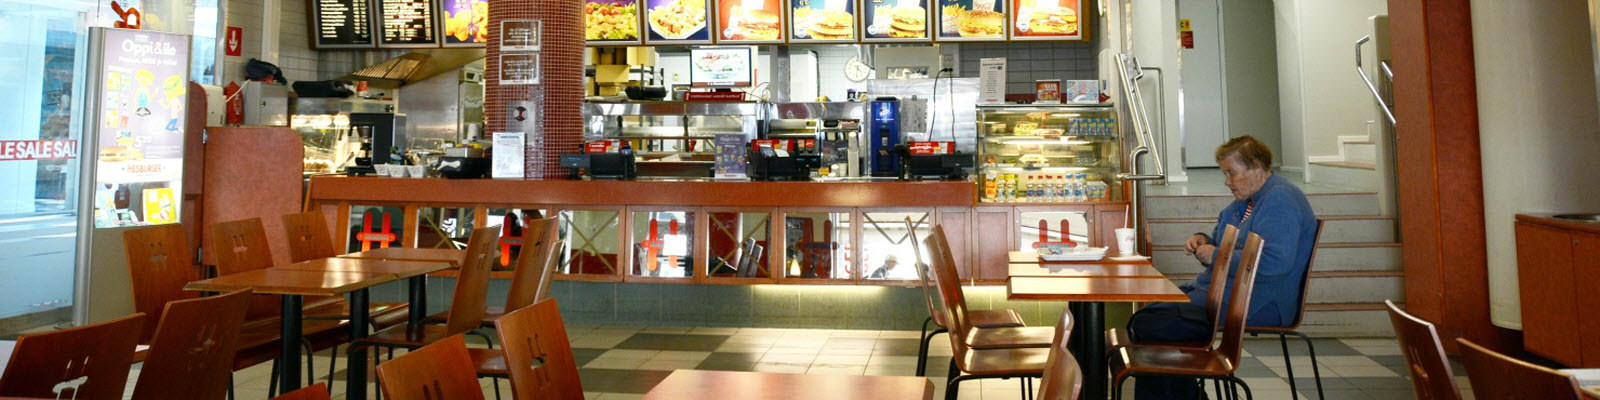 modern fast-food restaurant